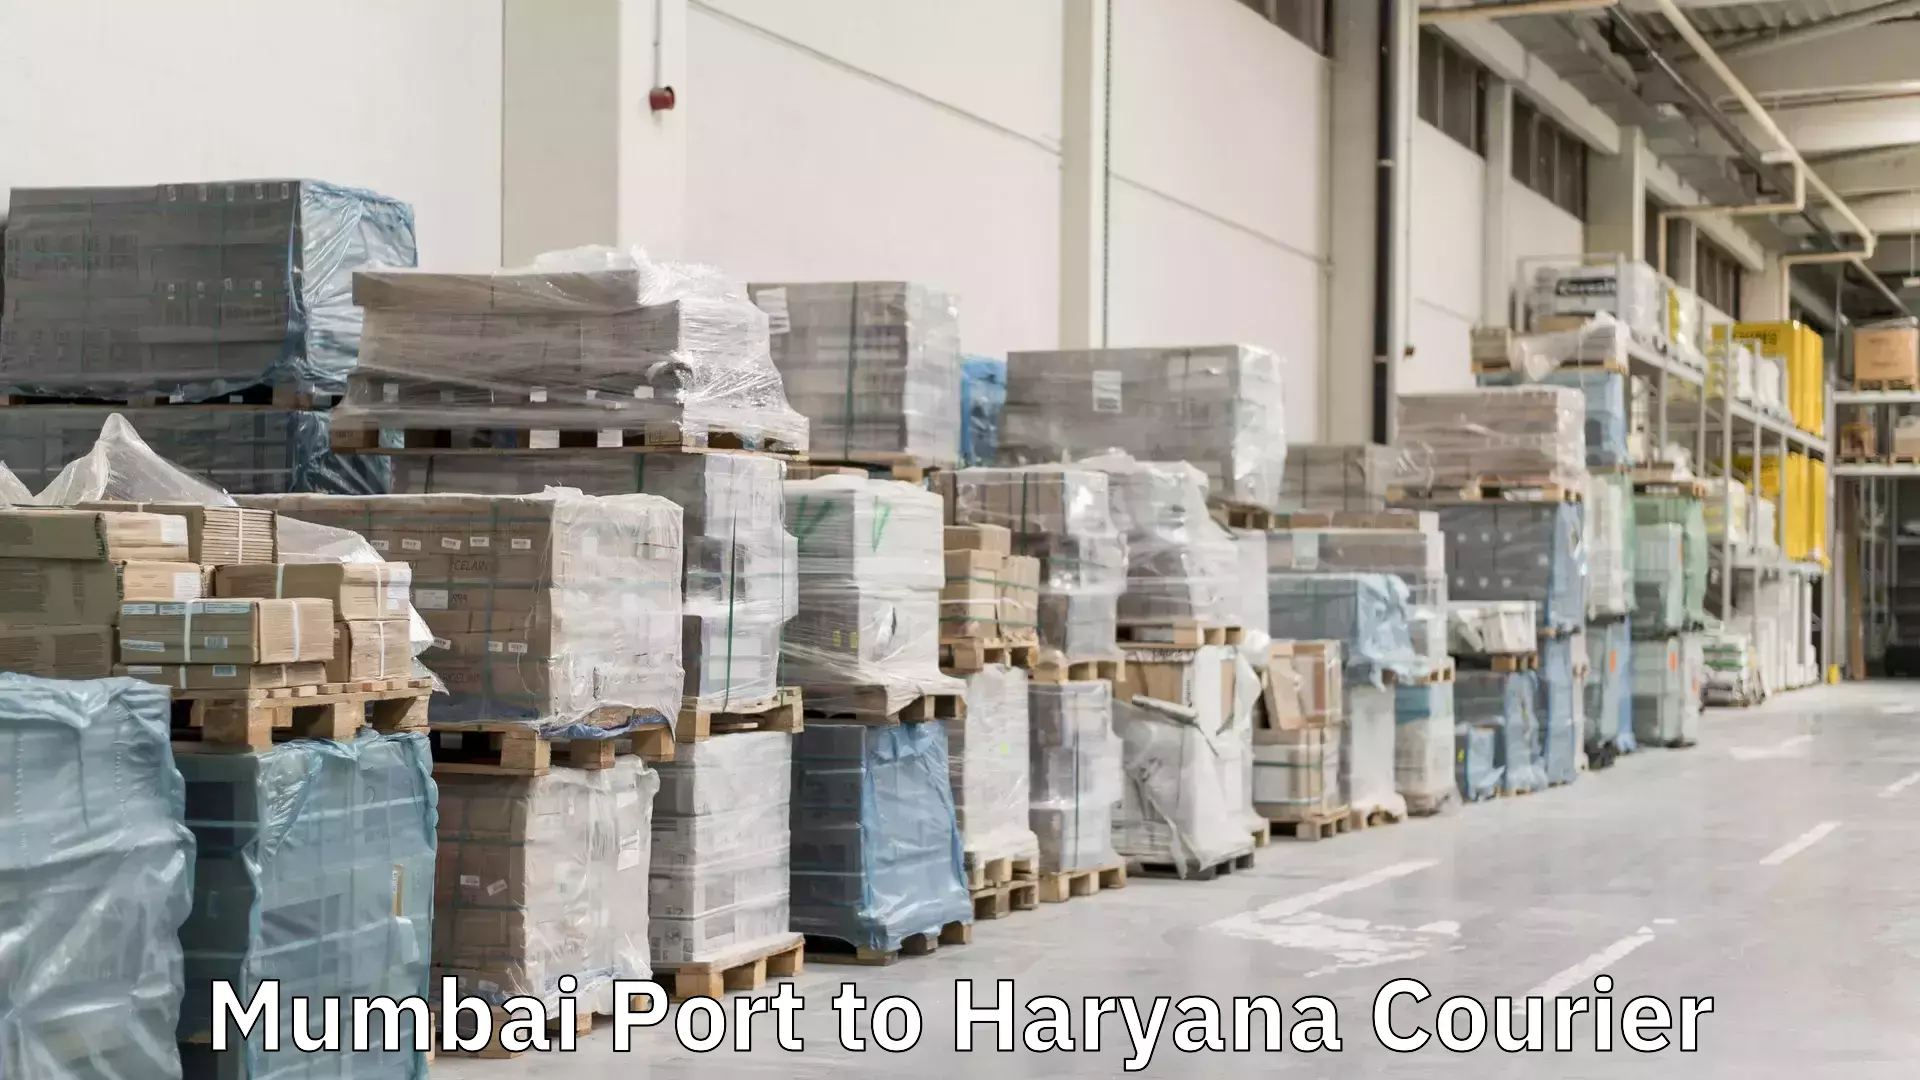 High-speed parcel service Mumbai Port to Haryana